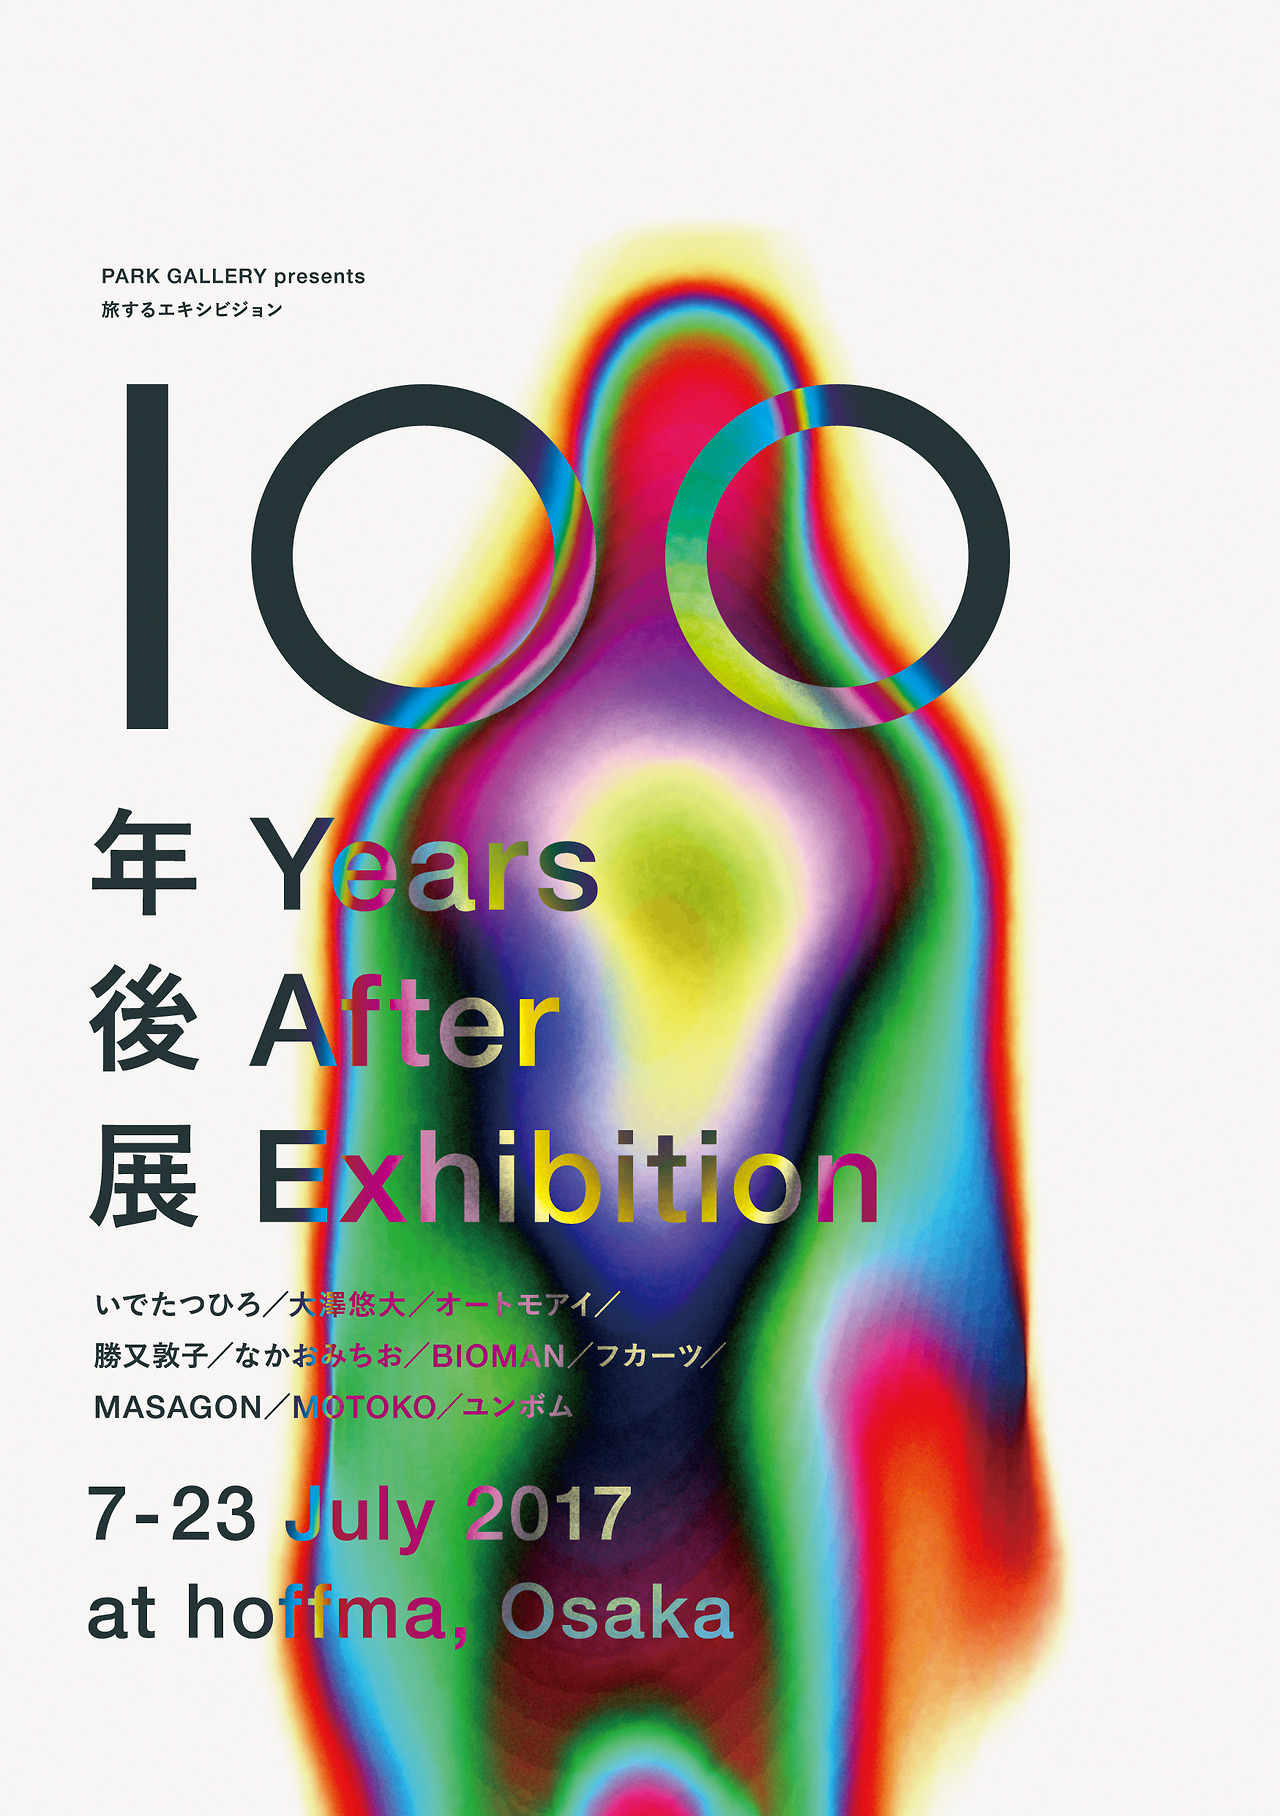 Gurafiku Japanese Exhibition Poster 100 Years After